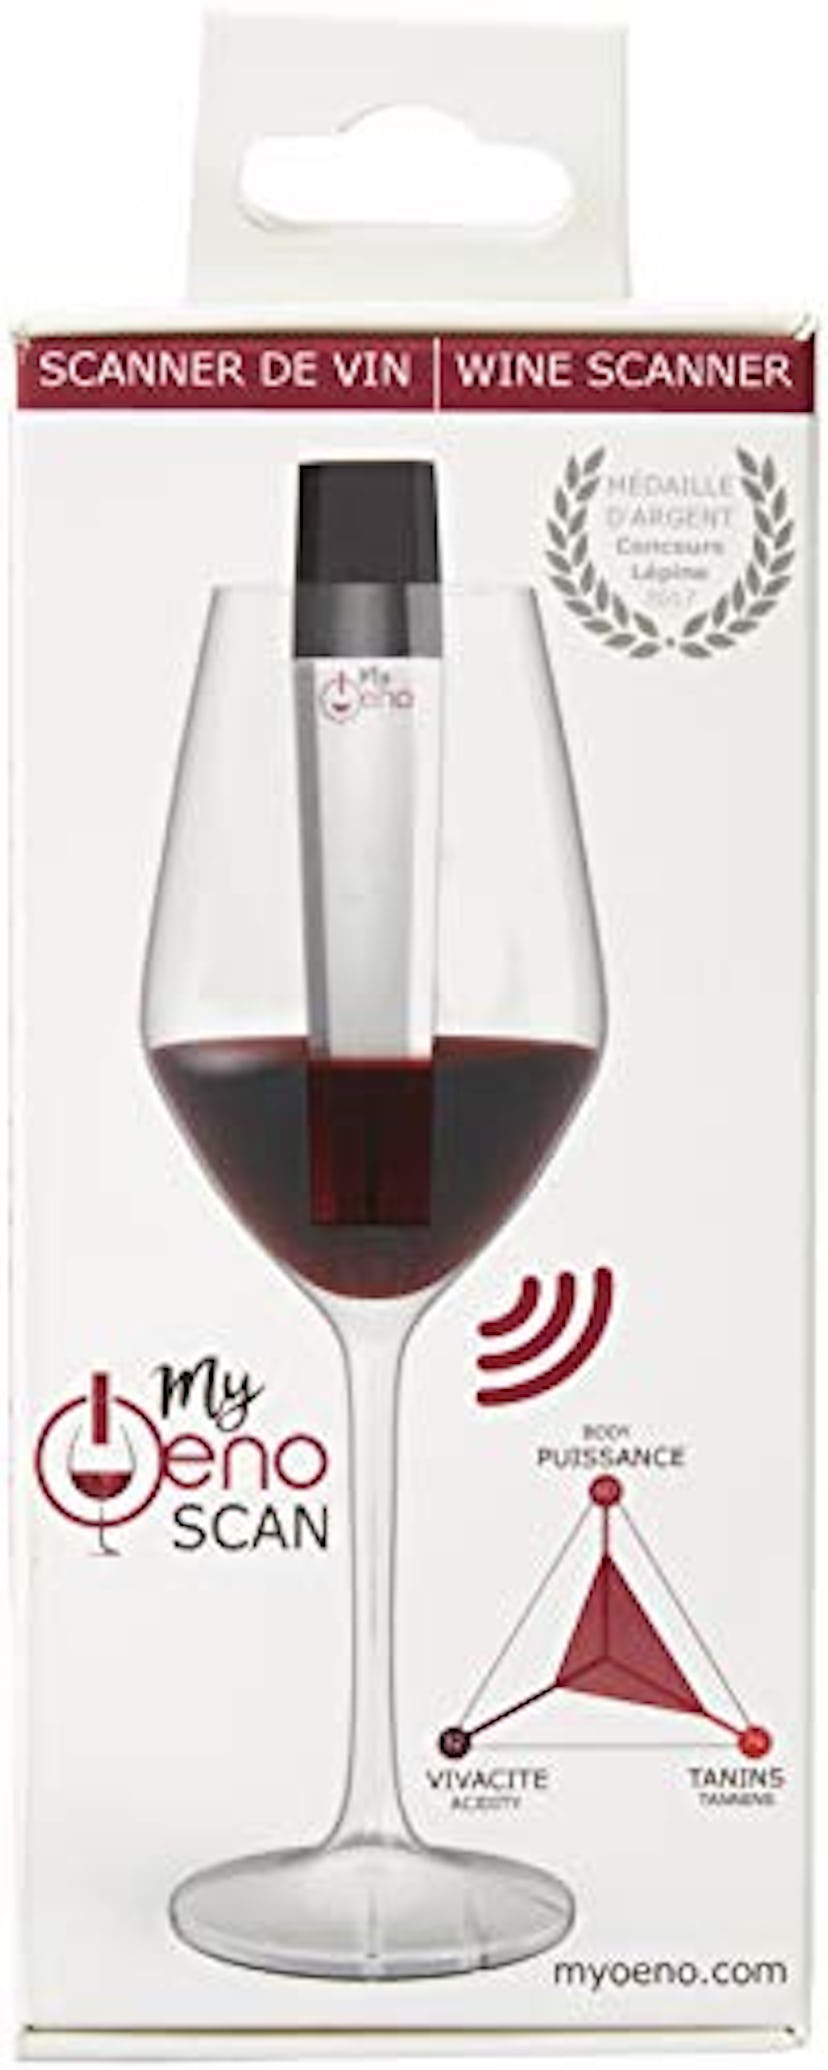 MyOeno The Smart Wine Scanner